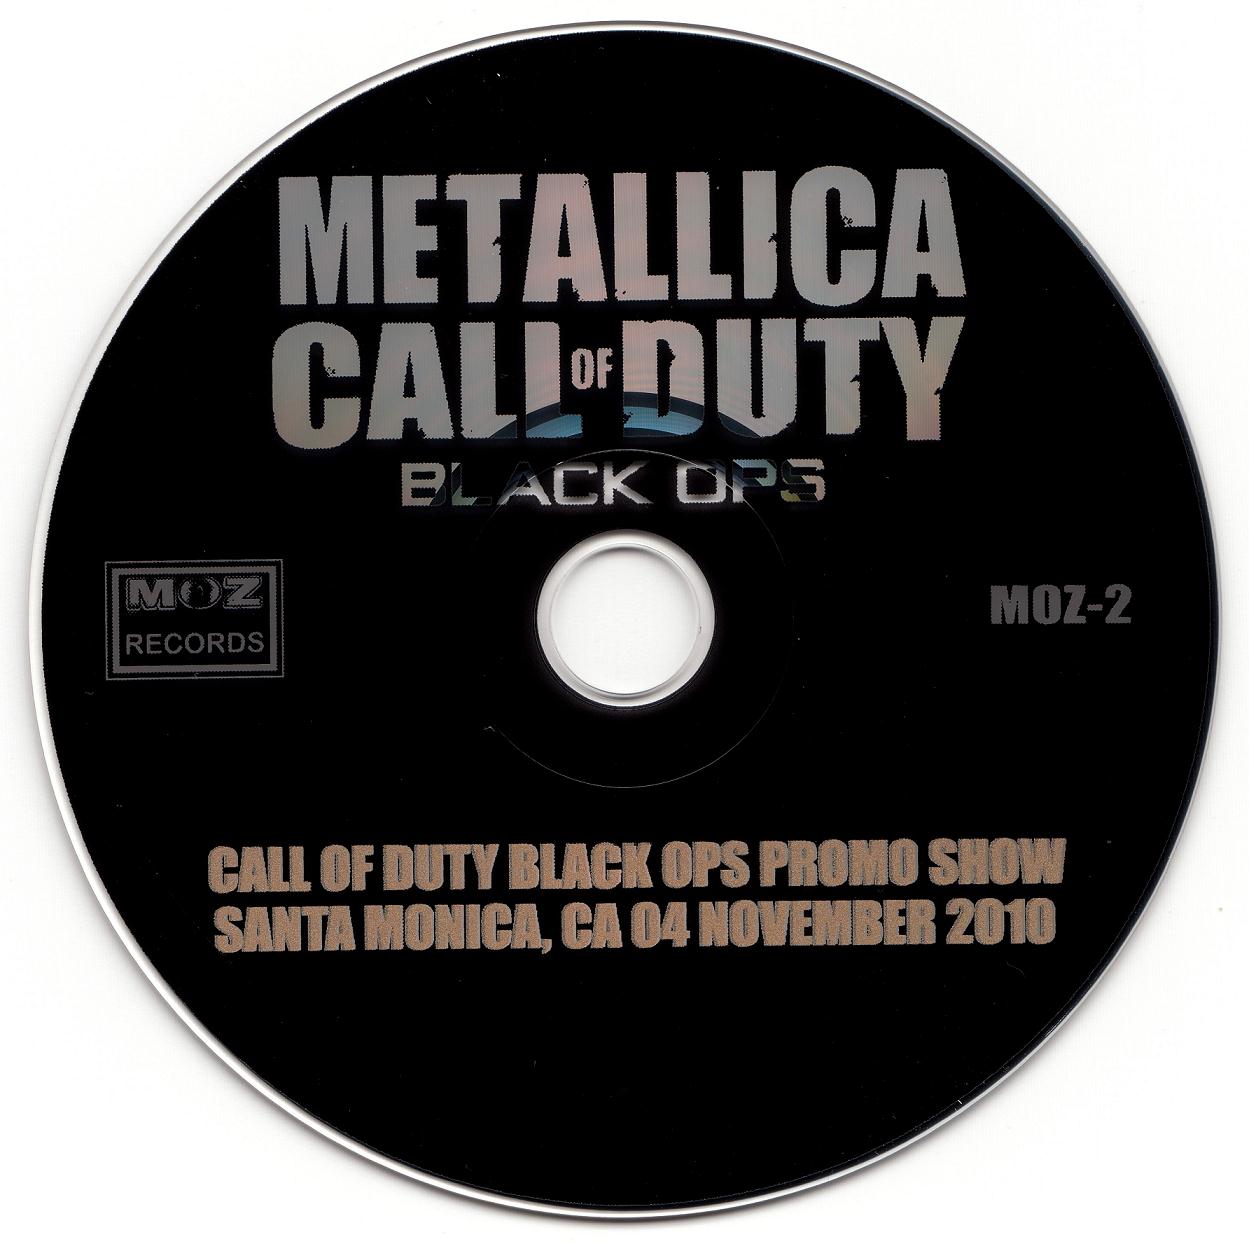 2010-11-04-Call_of_Duty_Black_ops-CD